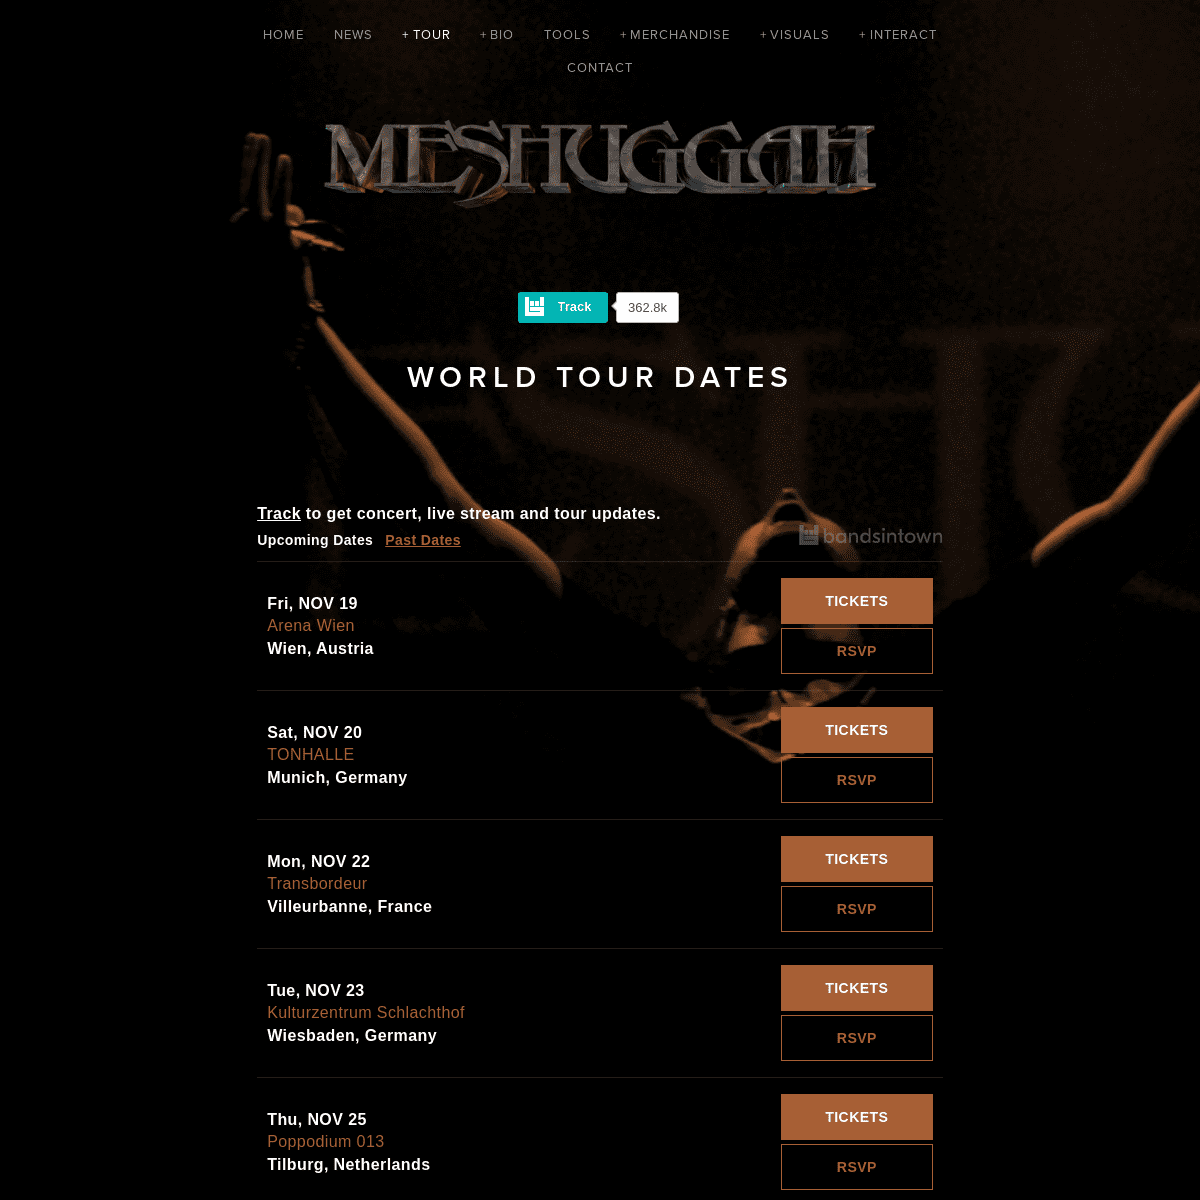 A complete backup of https://meshuggah.net